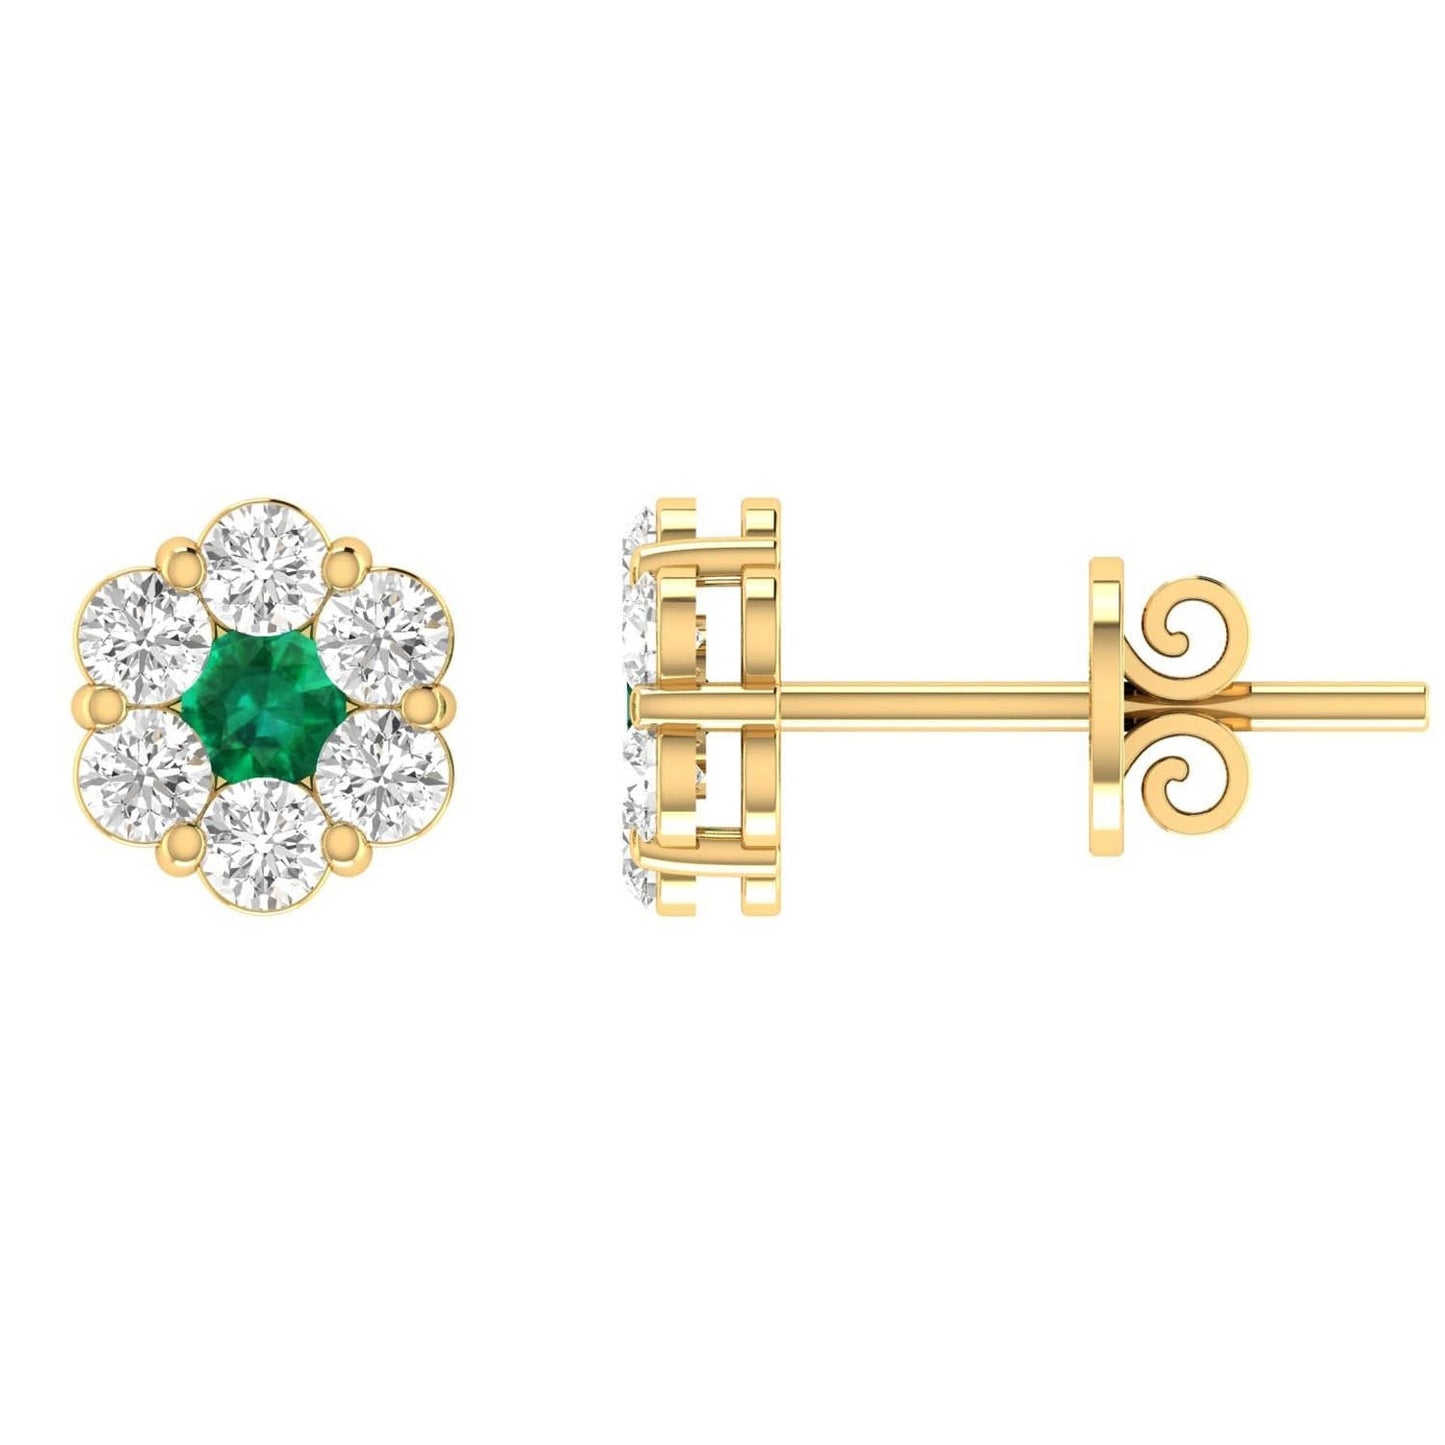 Emerald Diamond Stud Earrings with 0.53ct Diamonds in 9K Yellow Gold - 9YRE75GHE